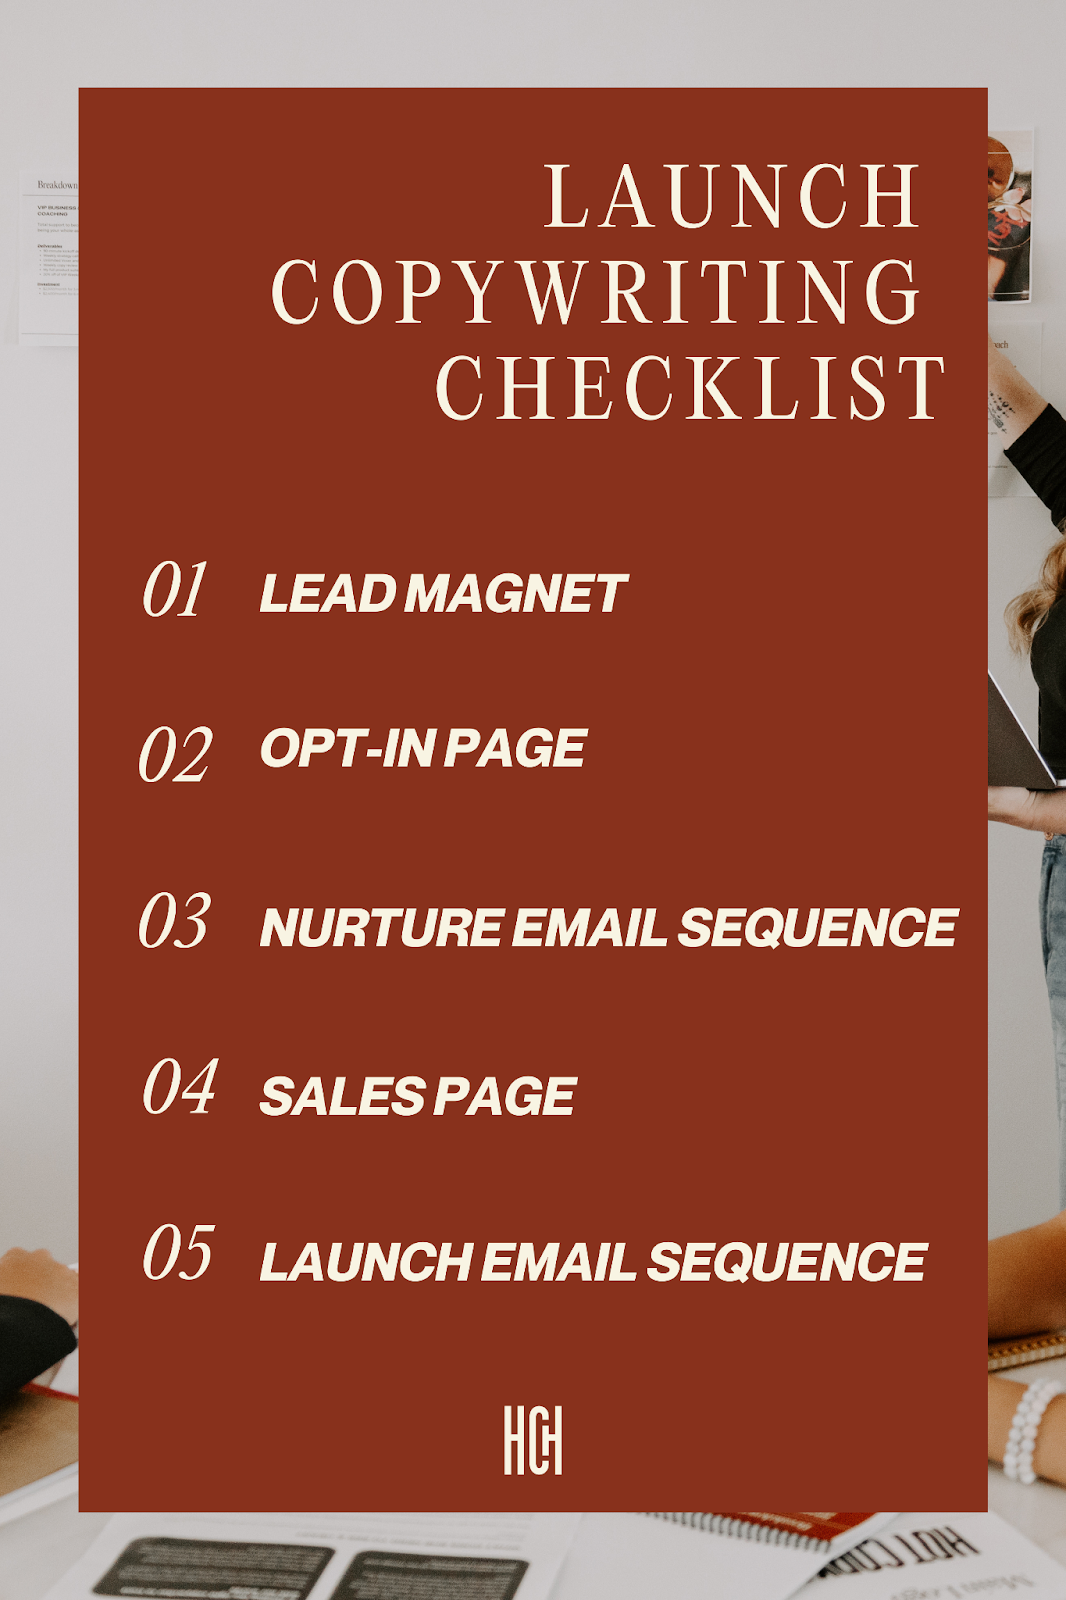 Launch copywriting checklist